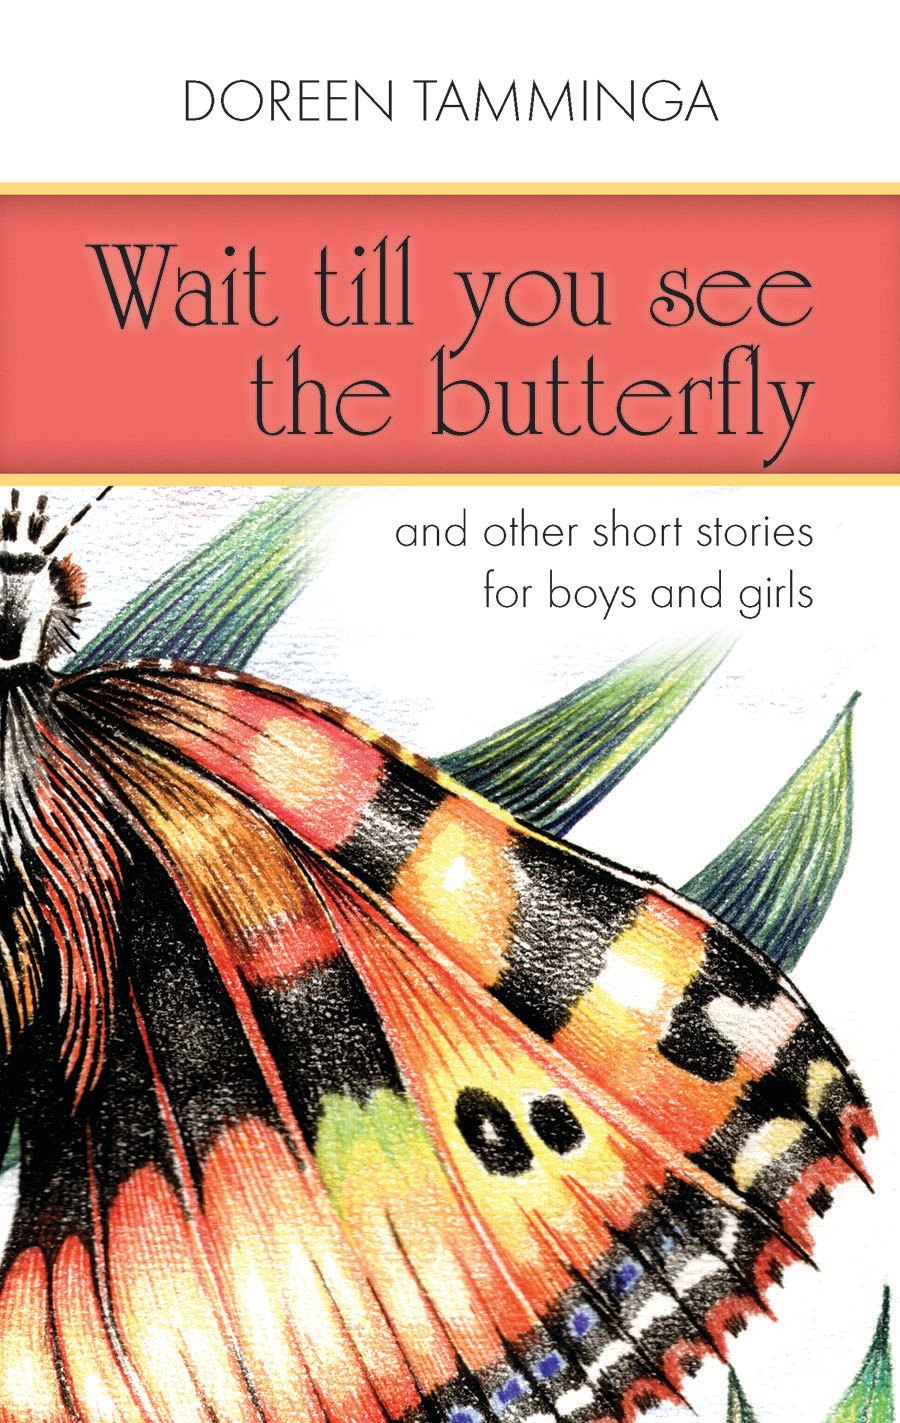 Christ butterfly